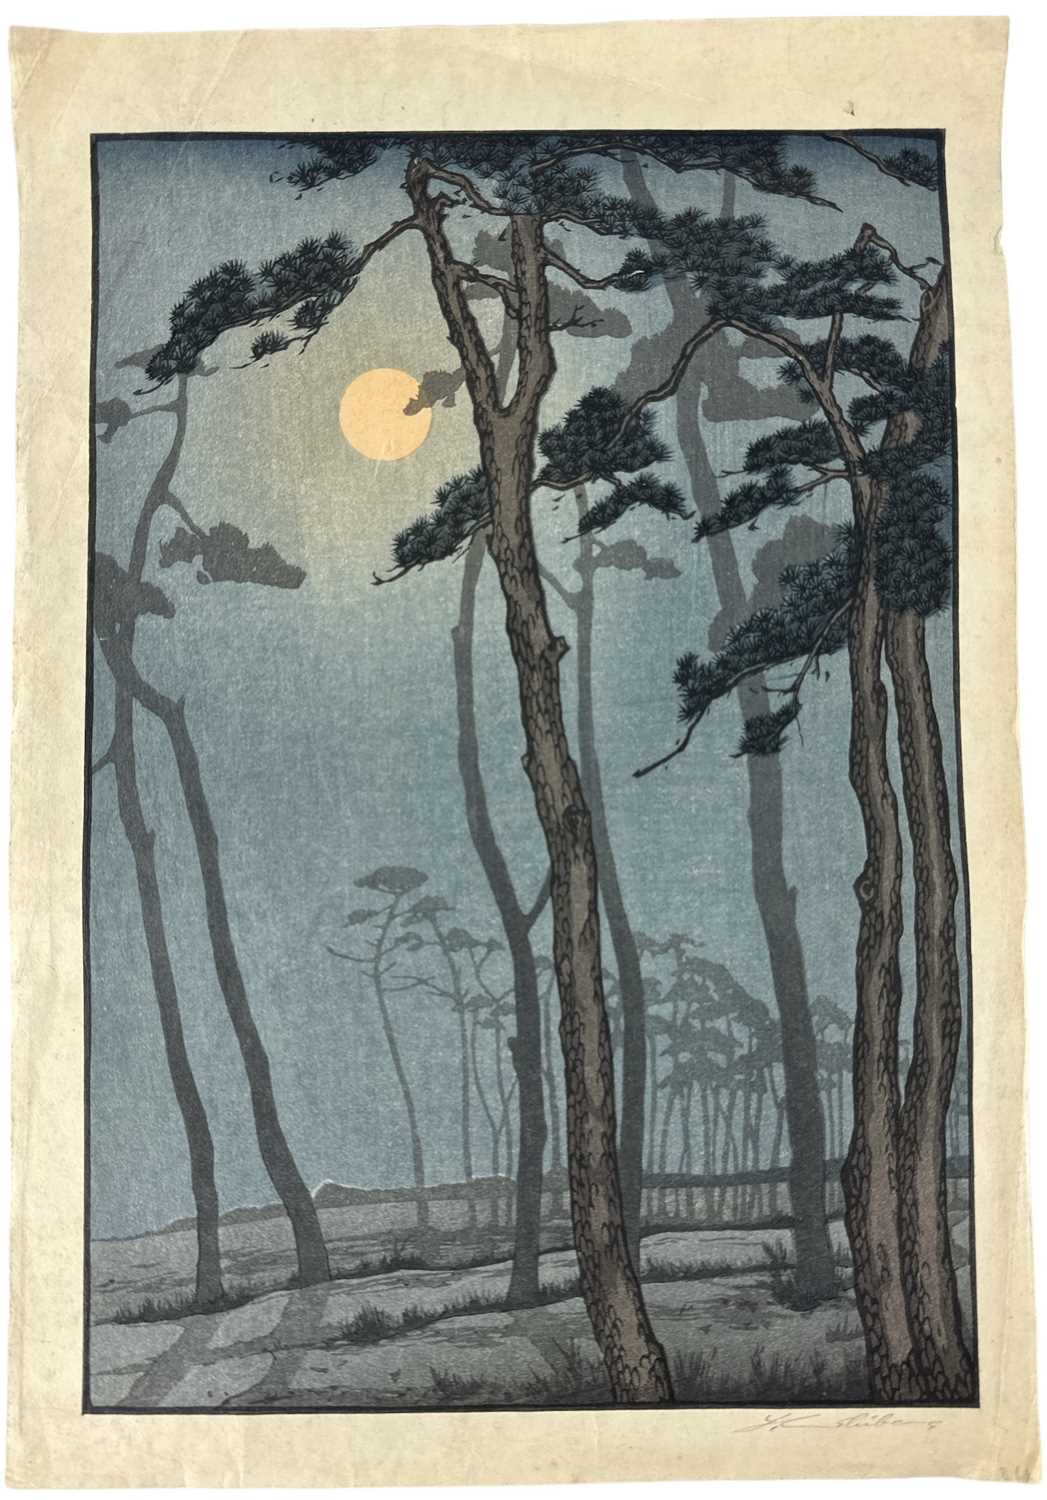 YOSHIJIRO URUSHIBARA (1888-1953); a Japanese woodcut print, 'Trees in Moonlight', after Frank